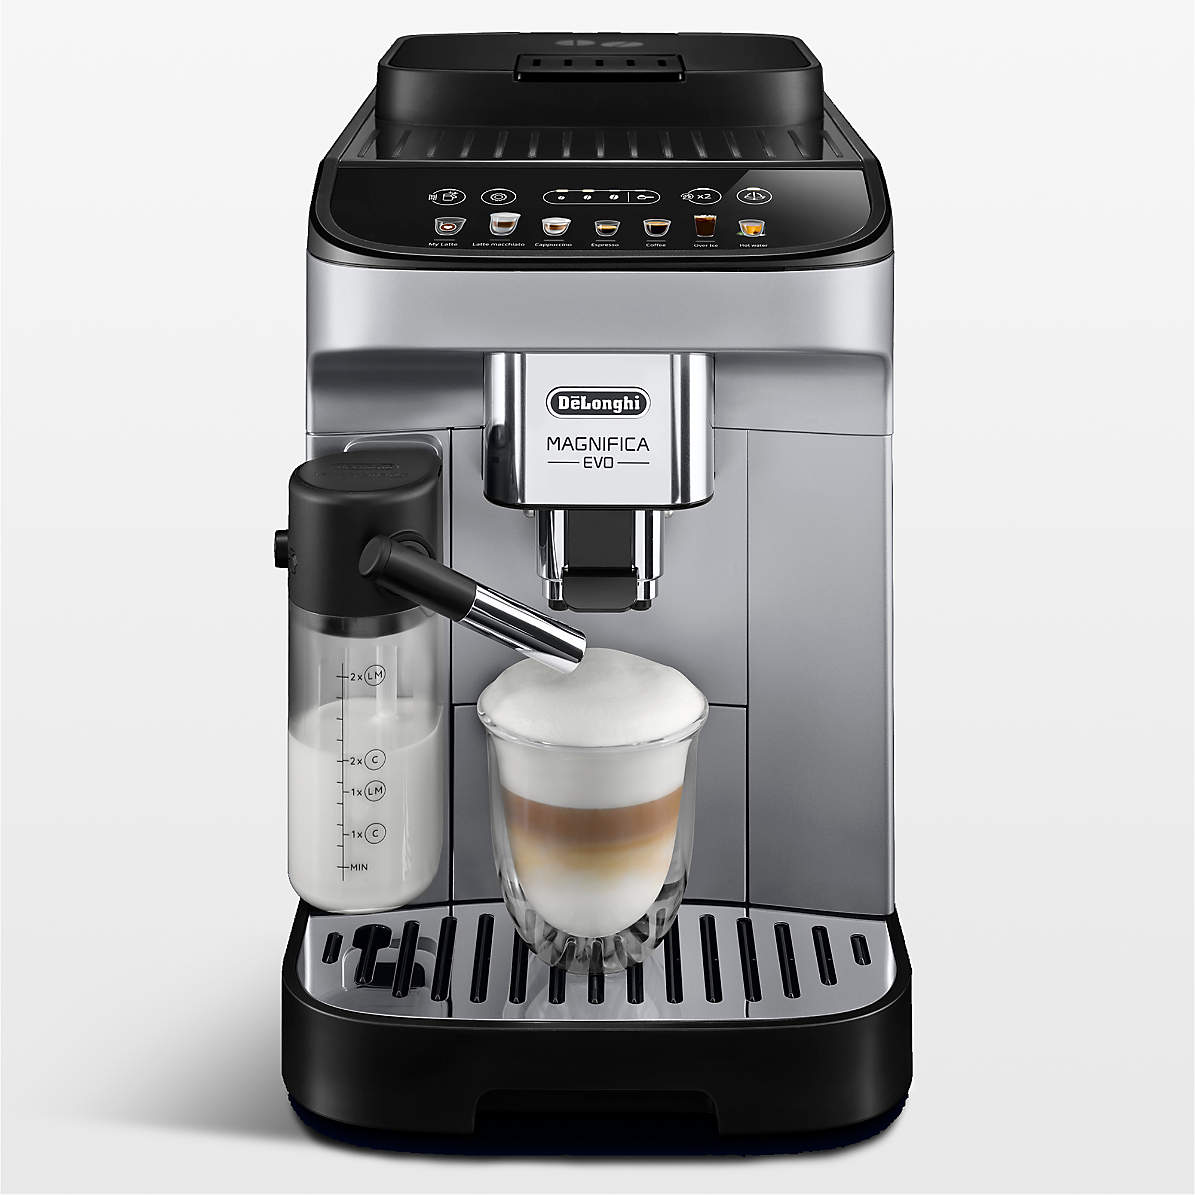 sjaal Verlengen Toegeven De'Longhi Magnifica Evo with LatteCrema Automatic Coffee and Espresso  Machine + Reviews | Crate & Barrel